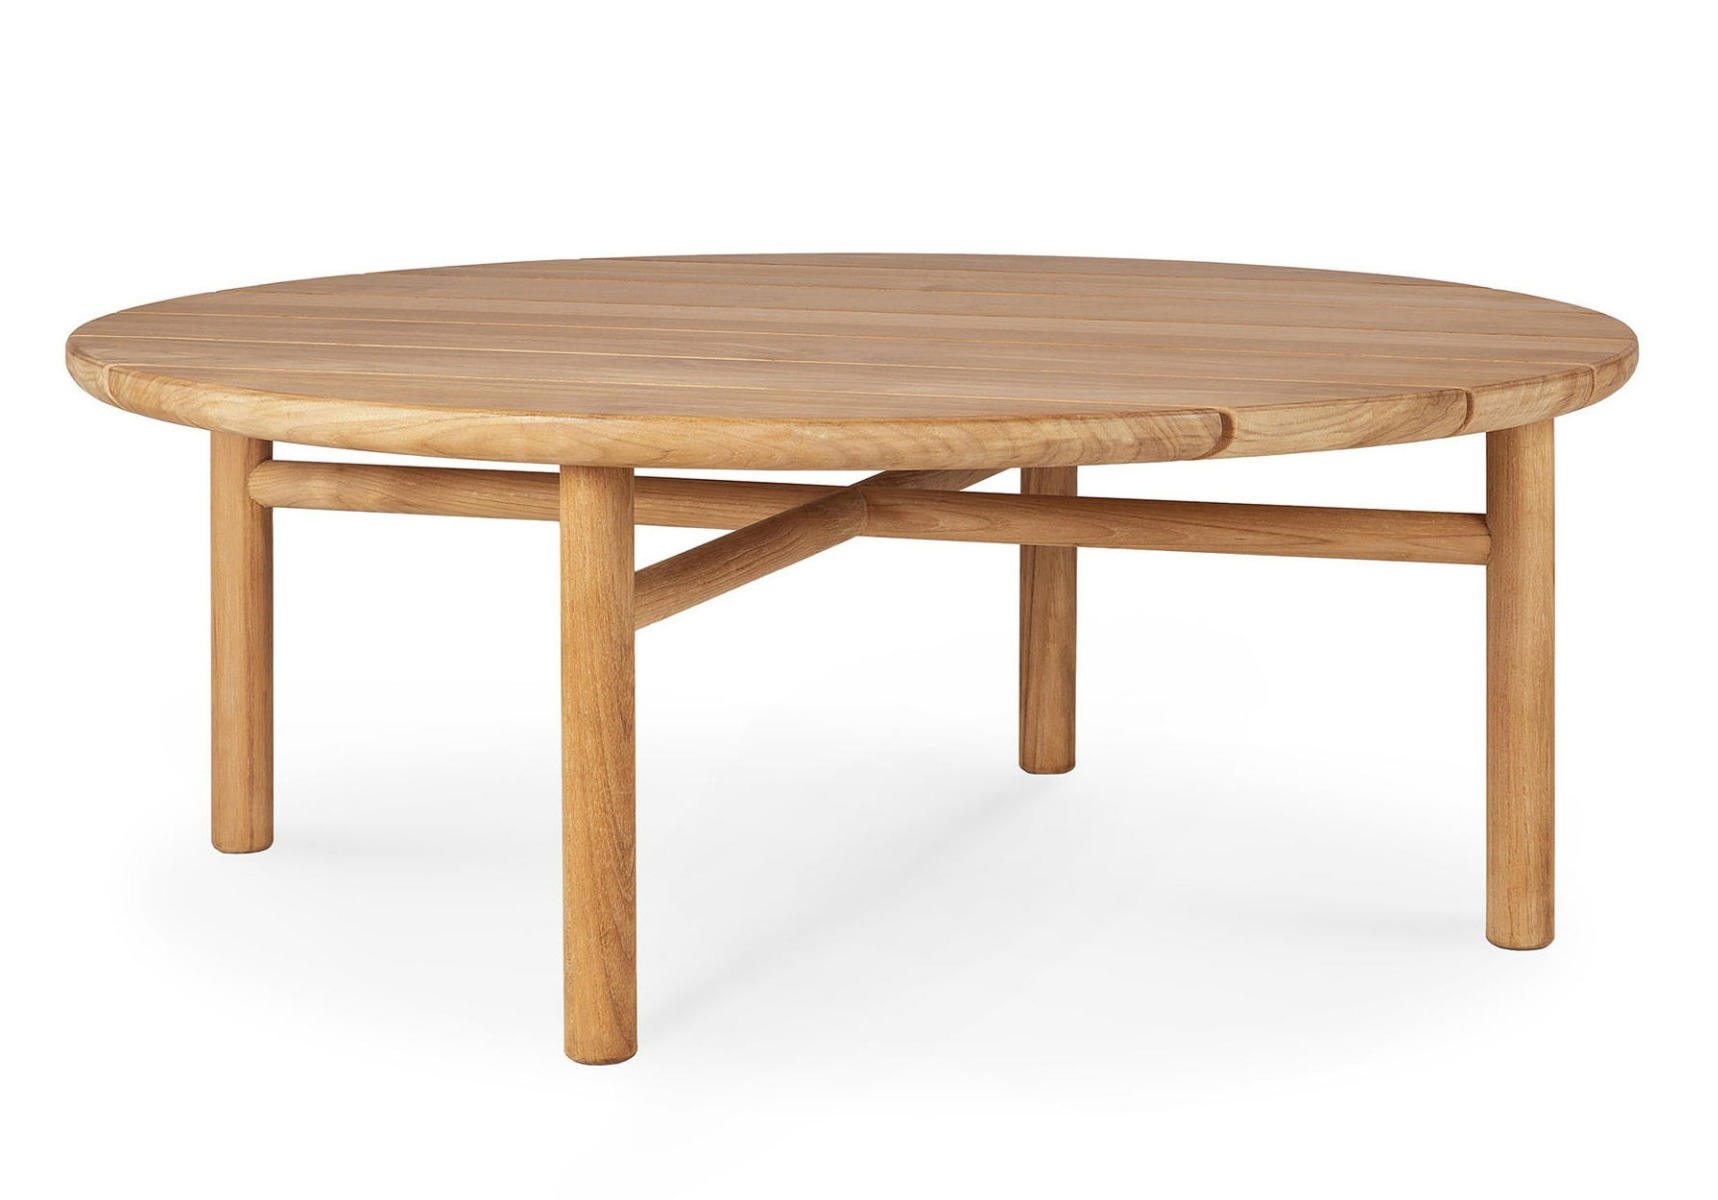 https://www.fundesign.nl/media/catalog/product/1/0/10265-teak-outdoor-quatro-coffee-table-side-cut-web-new-pro-g-arcit18.jpg